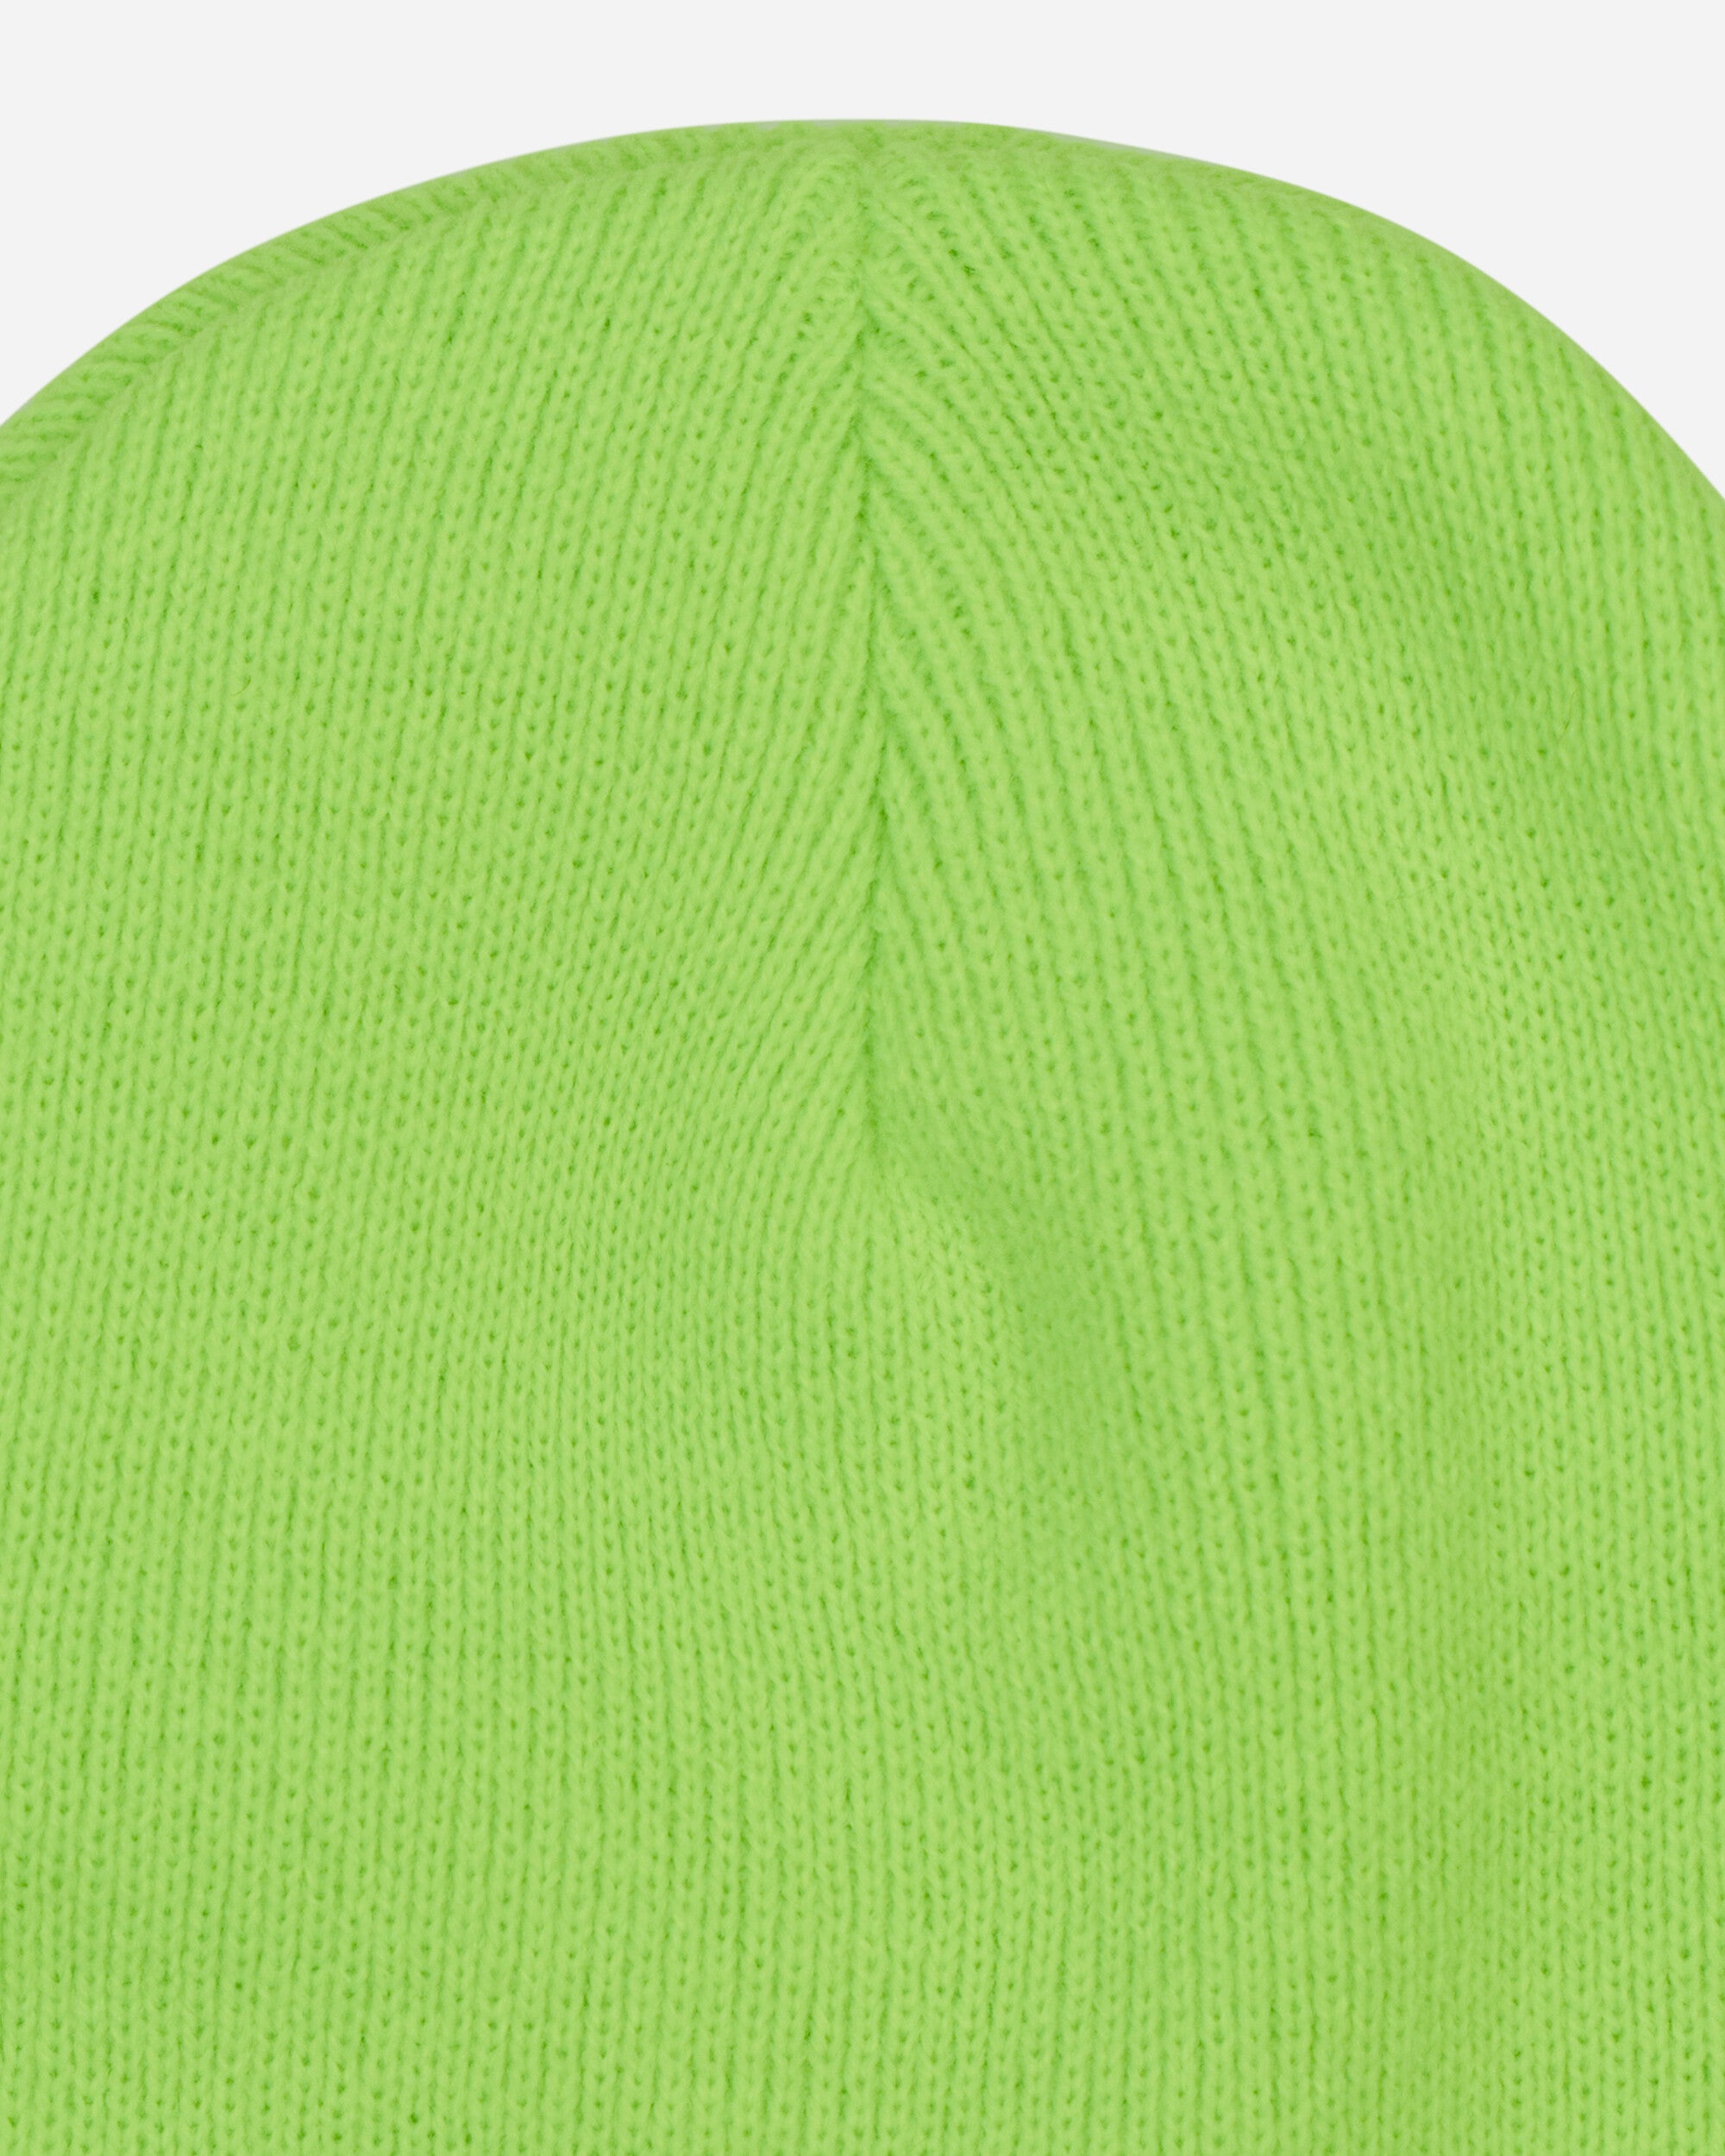 Stüssy Stock Cuff Beanie Flo Green Hats Beanies 1321020 FLGR